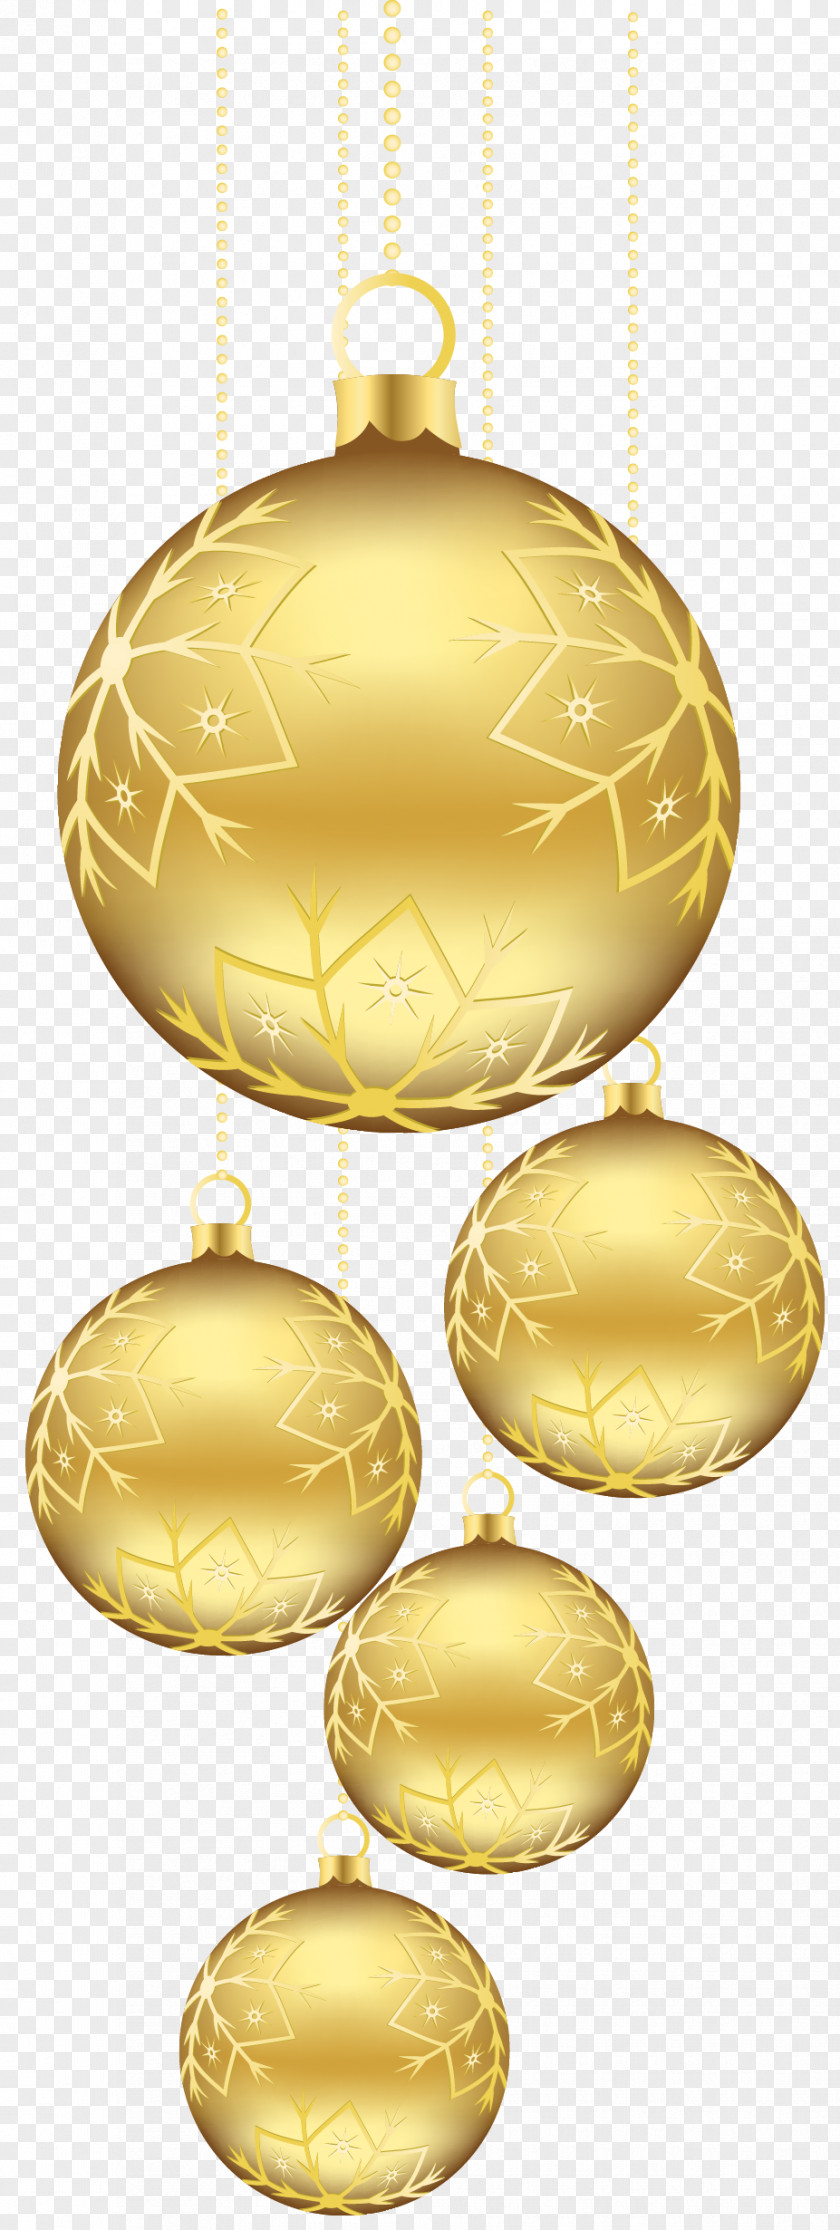 Christmas Golden Balls Ornaments Picture Ornament Gold Clip Art PNG